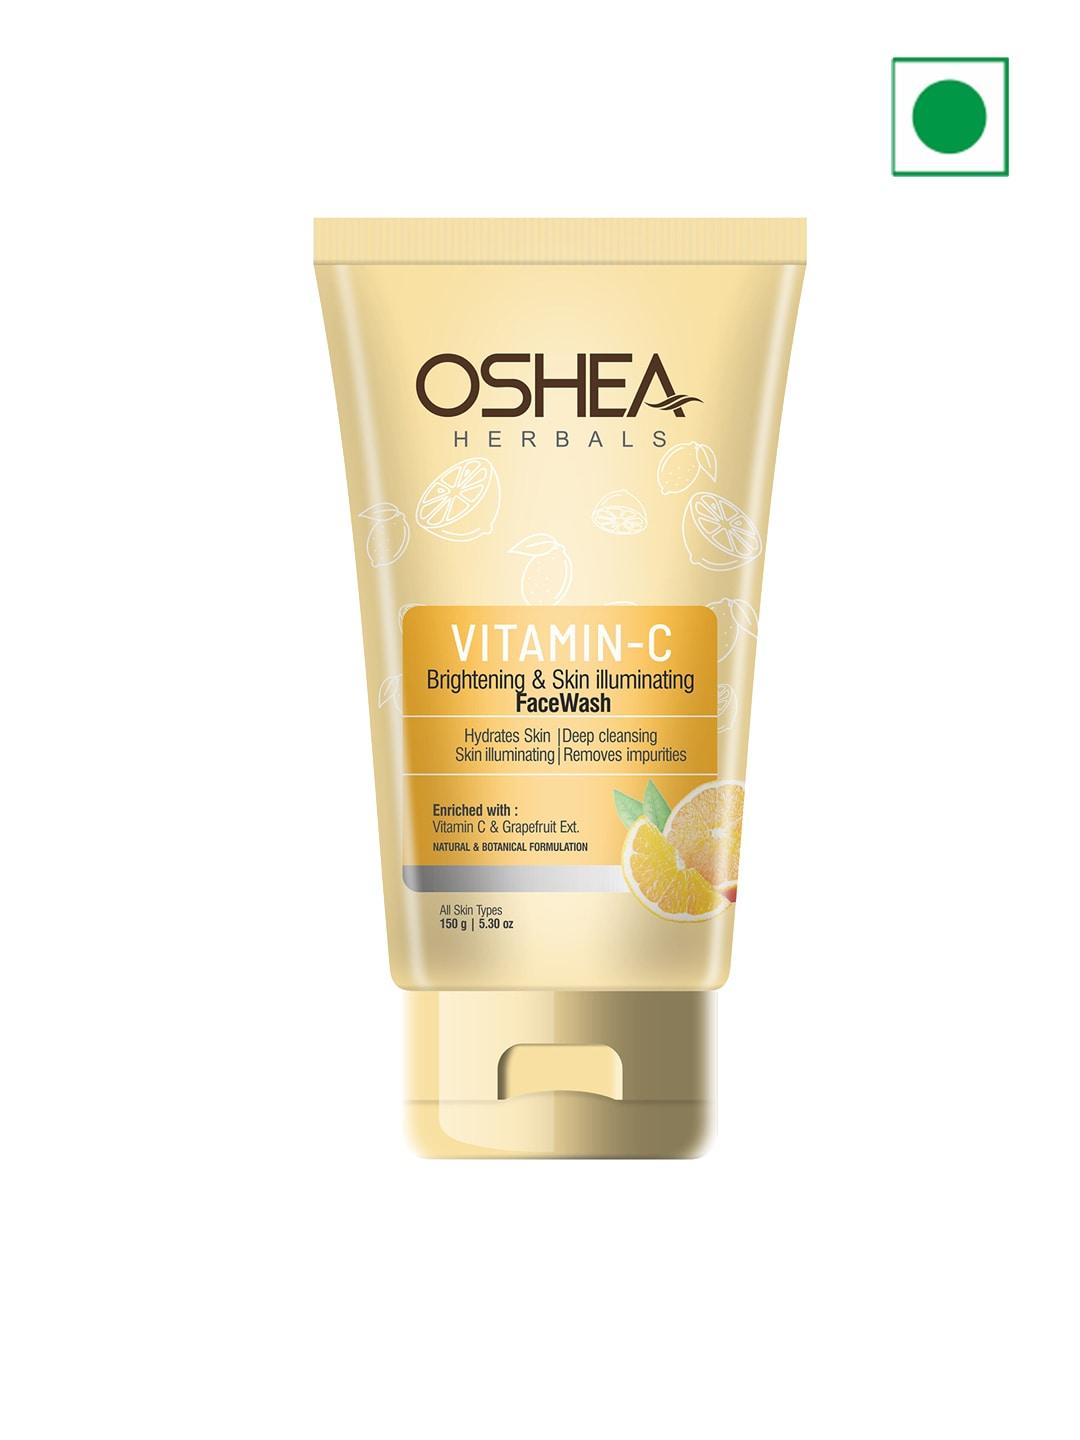 oshea herbals vitamin c face wash 150g